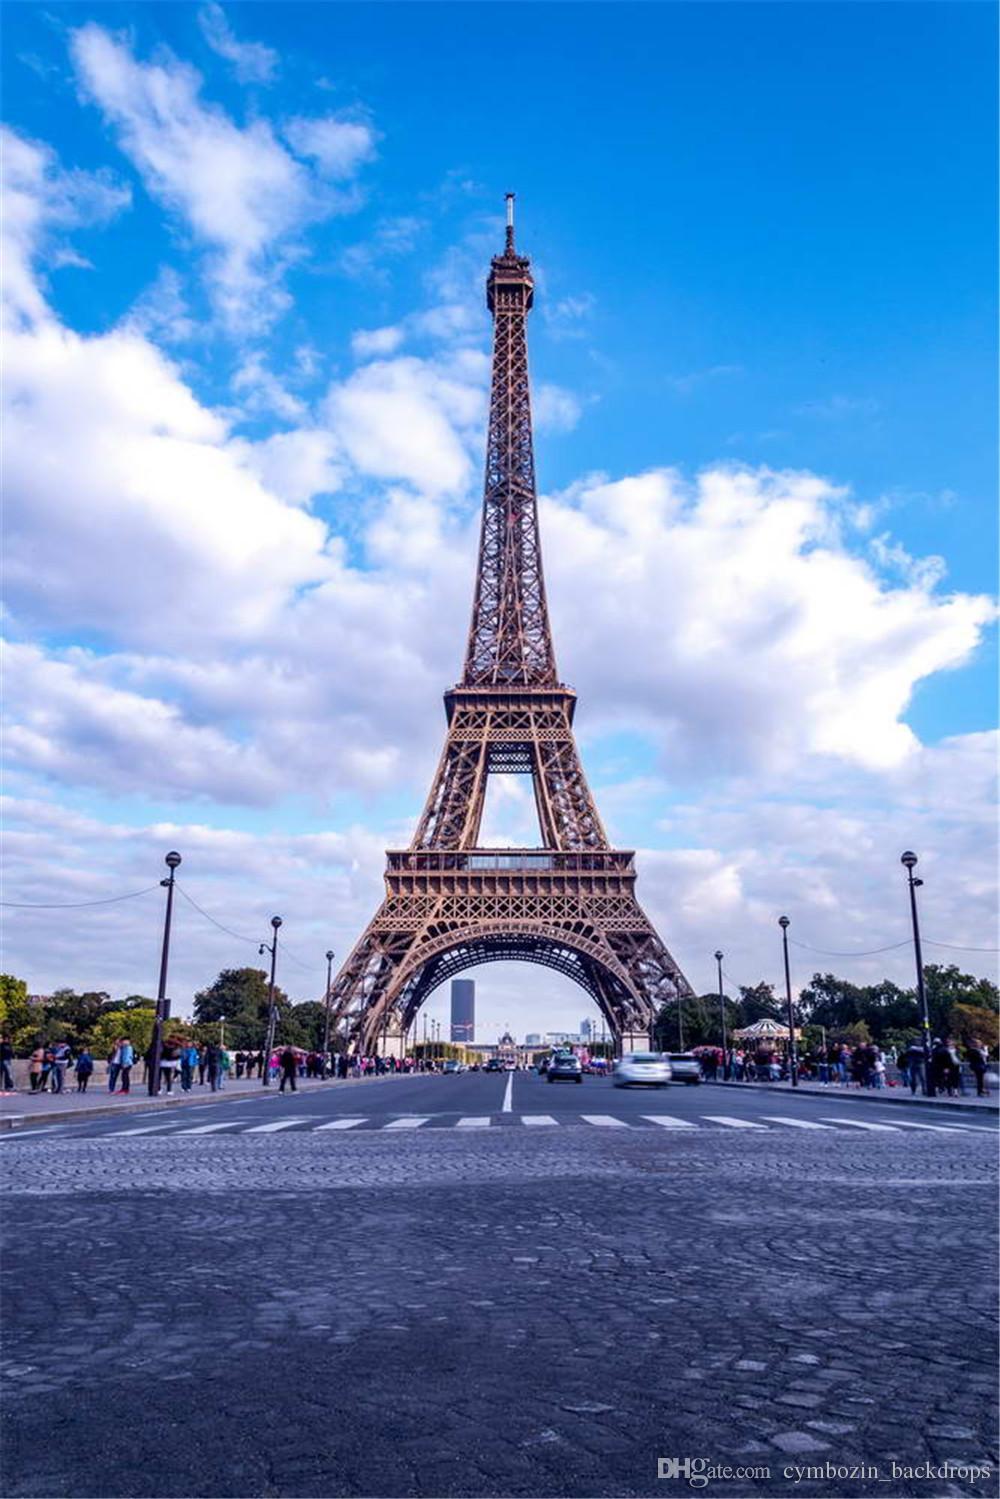 Paris Eiffel Tower Photography Backdrop Printed Blue Sky White